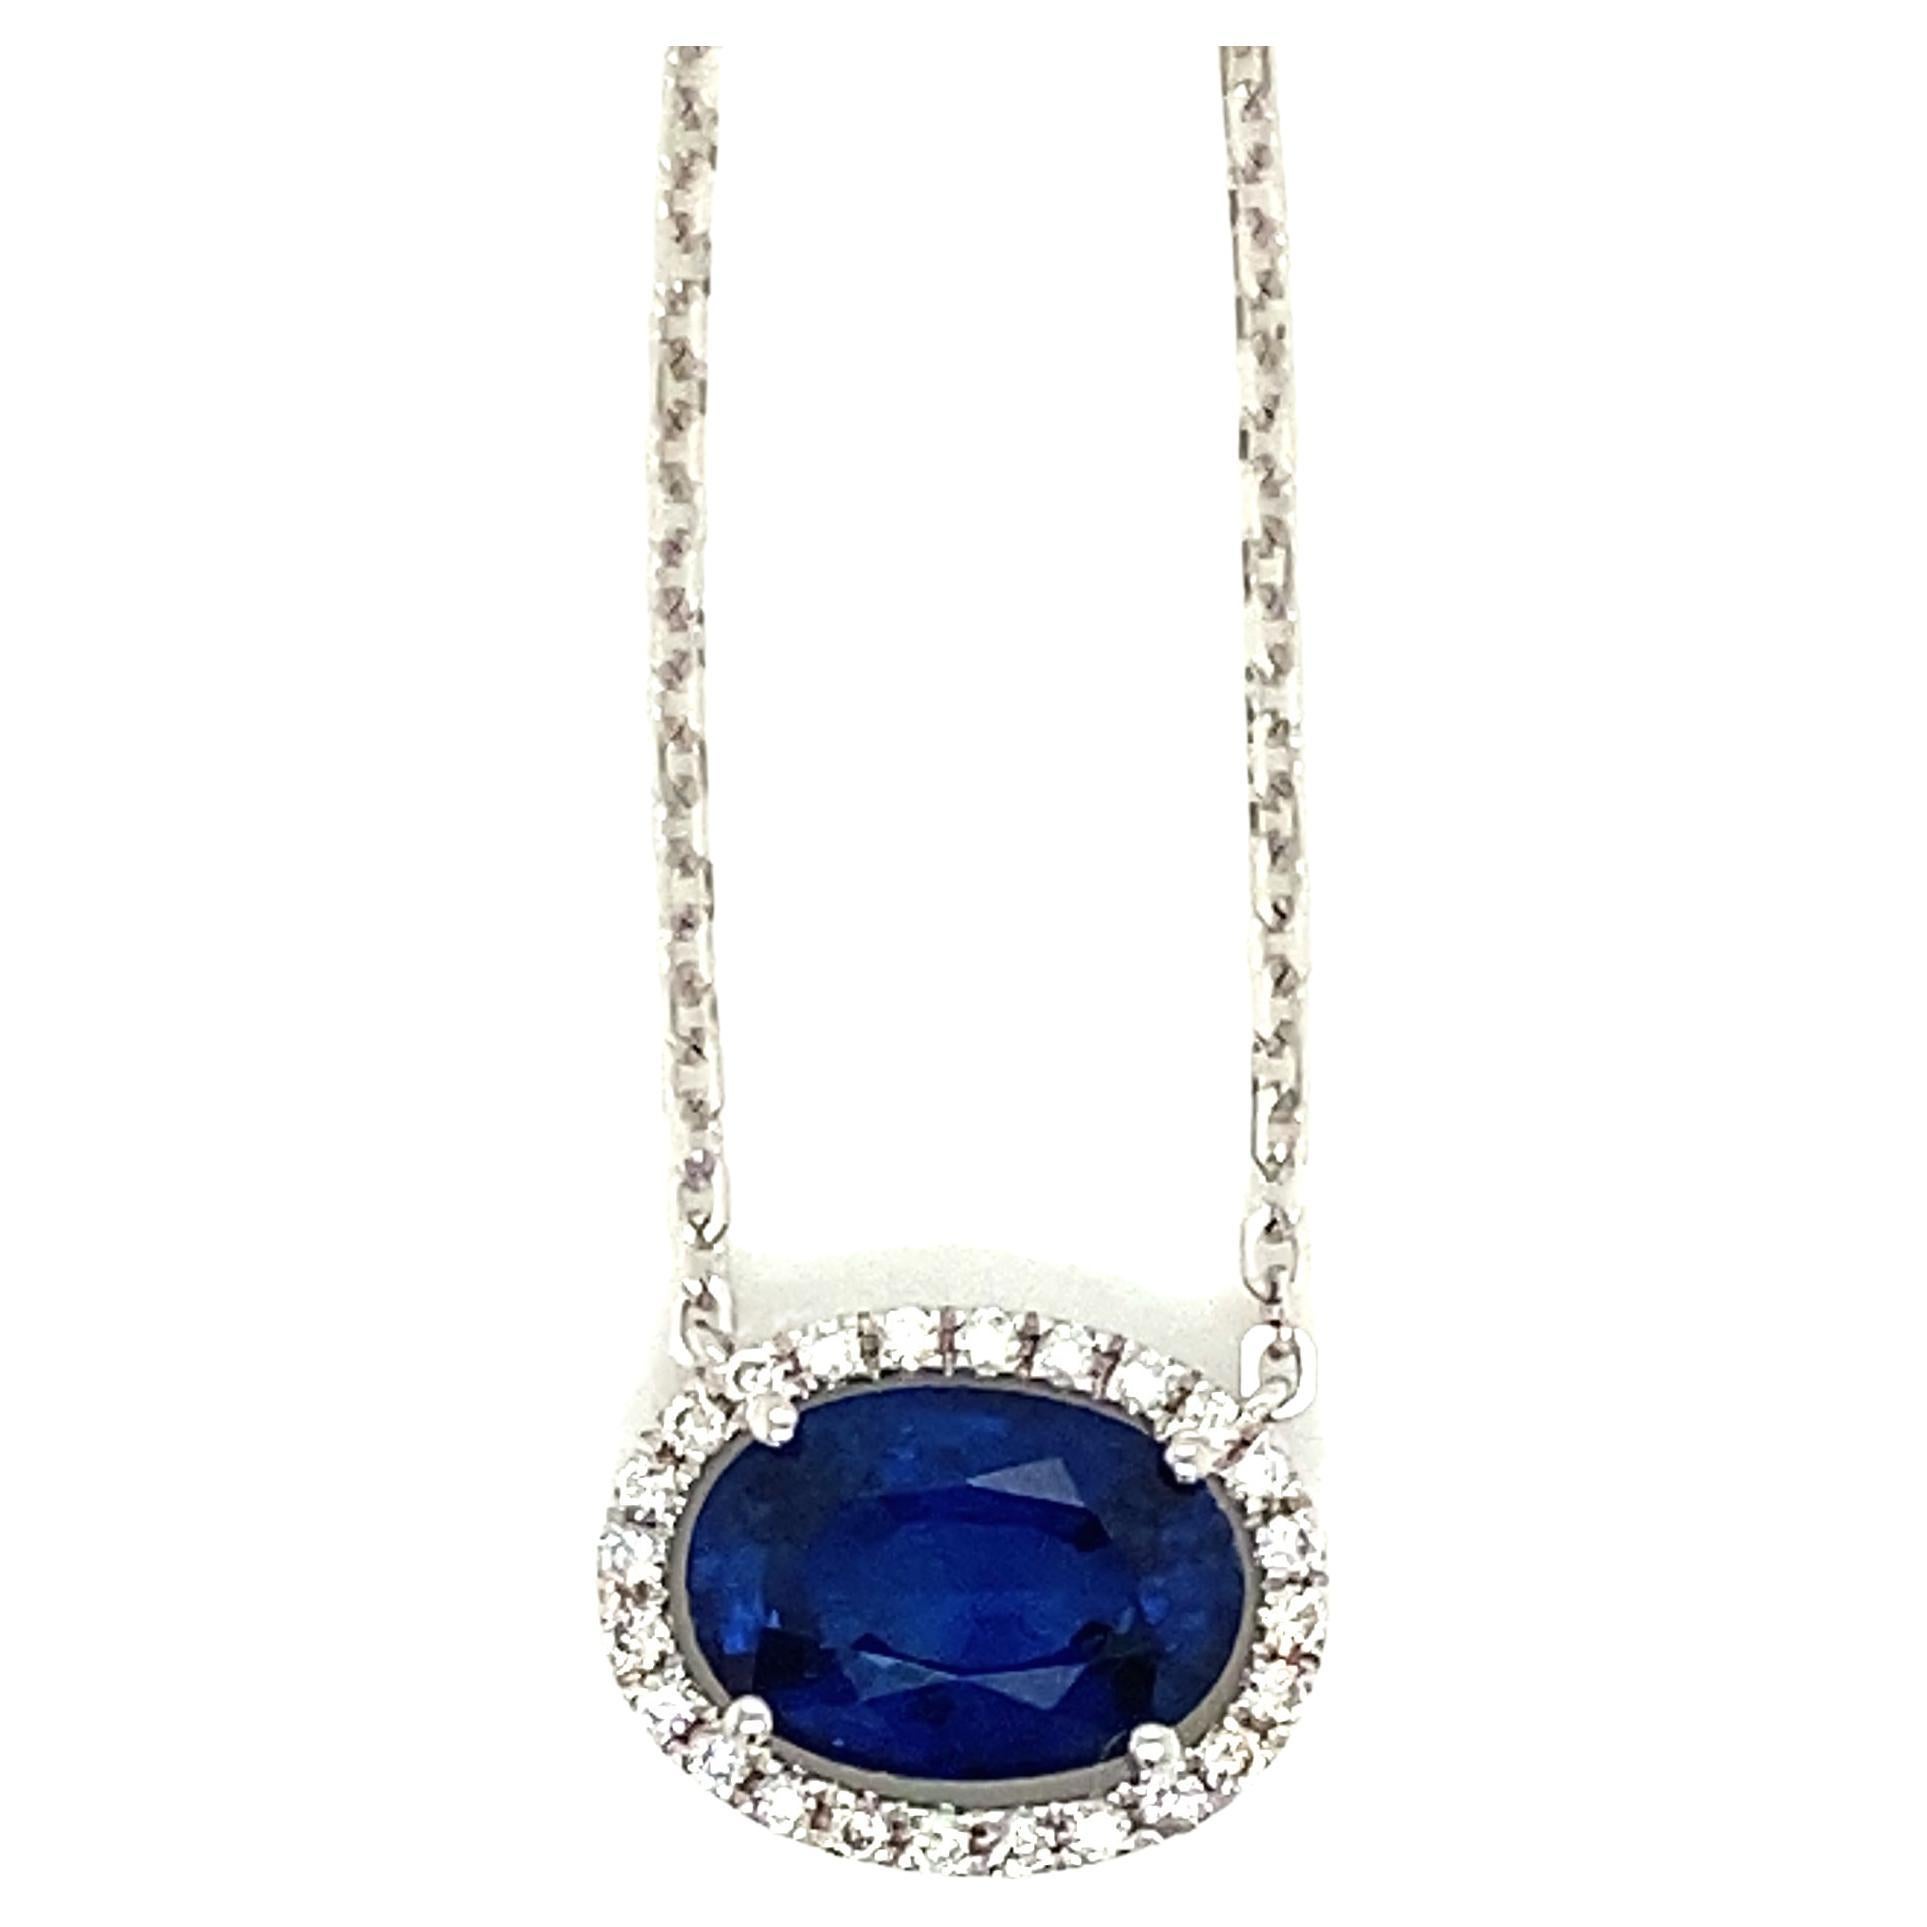 2.29 Carat Oval-Cut Vivid Blue Sapphire and White Diamond Pendant Necklace